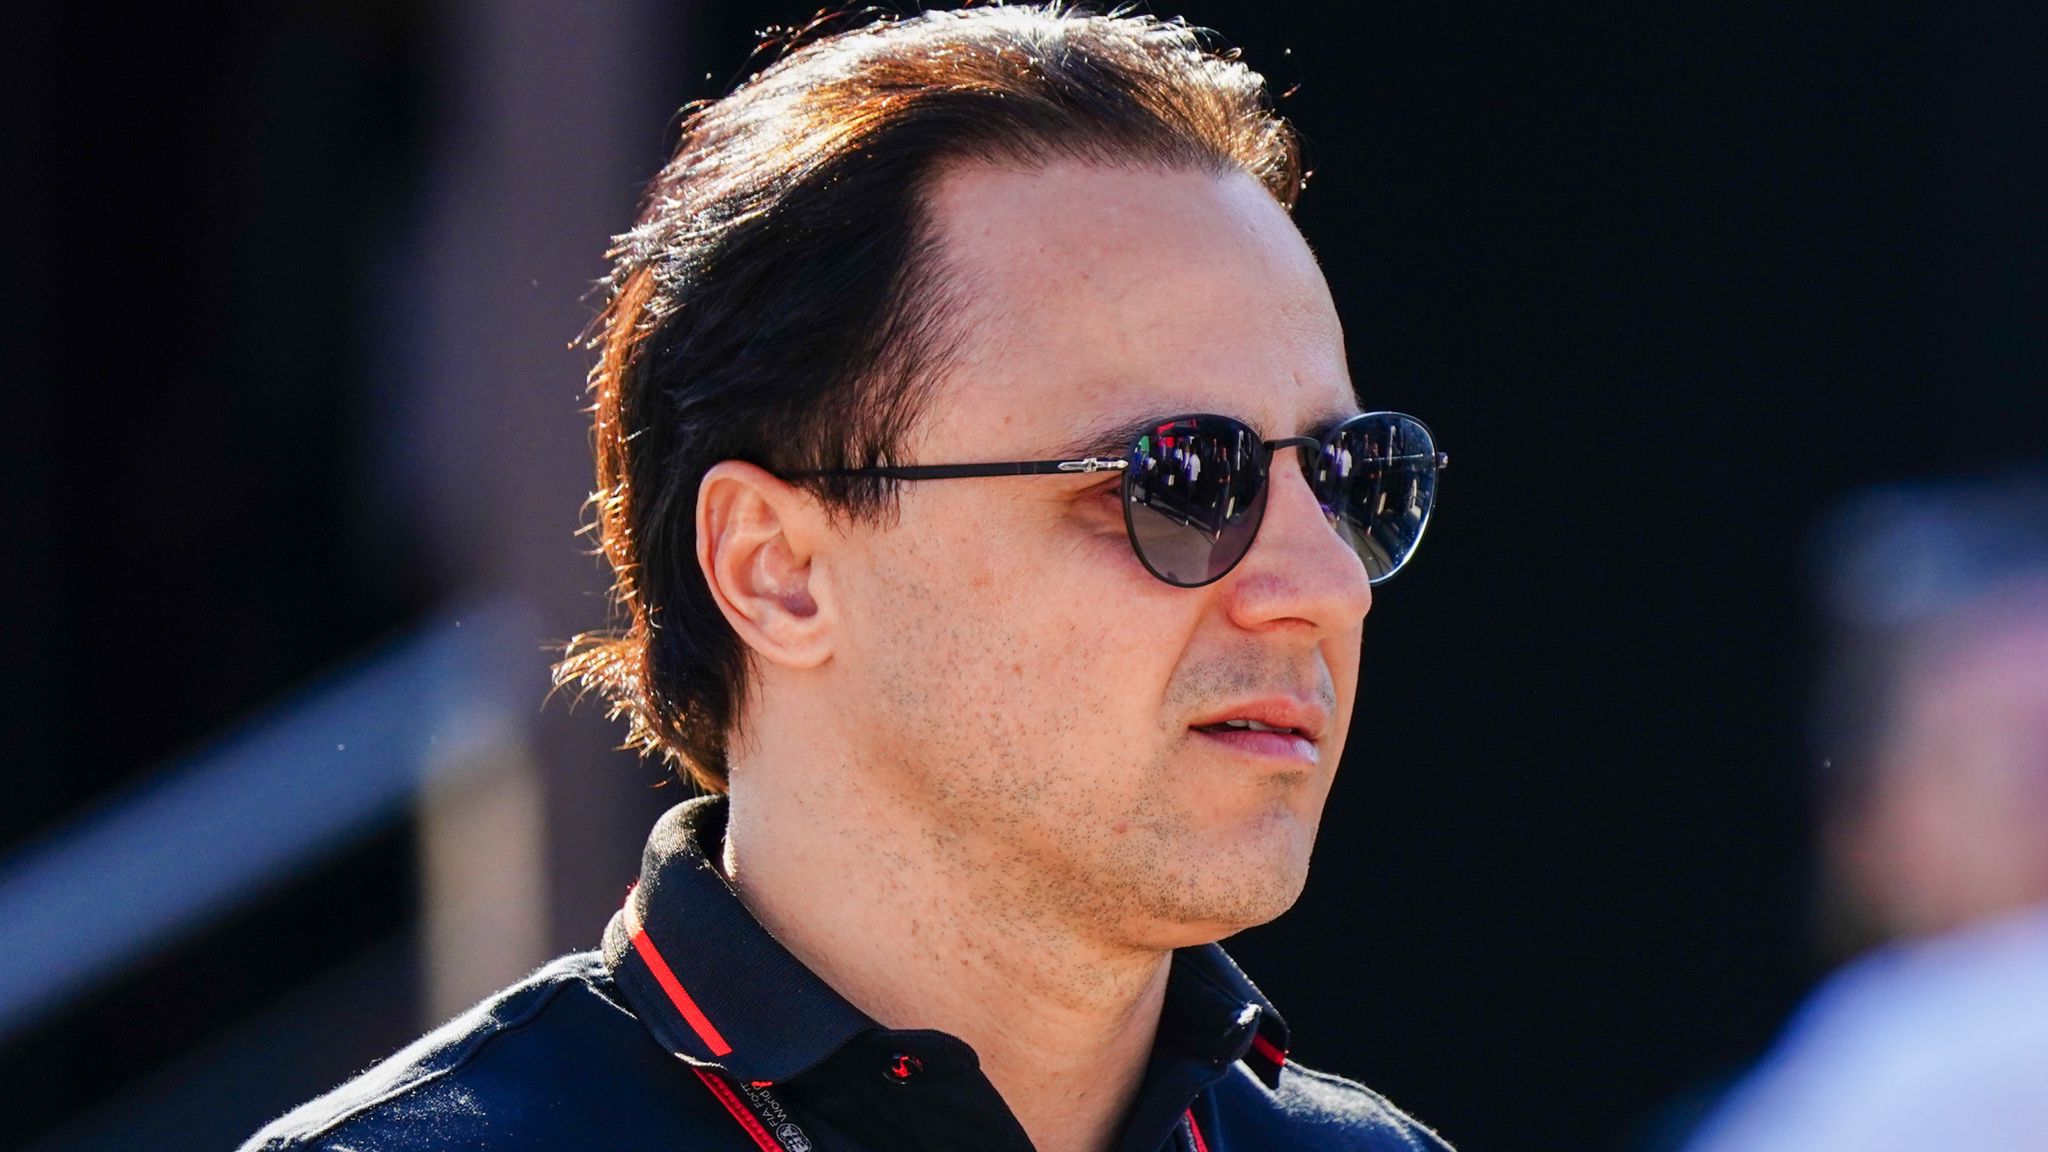 F1 'Crashgate' scandal: Felipe Massa considers action over 2008